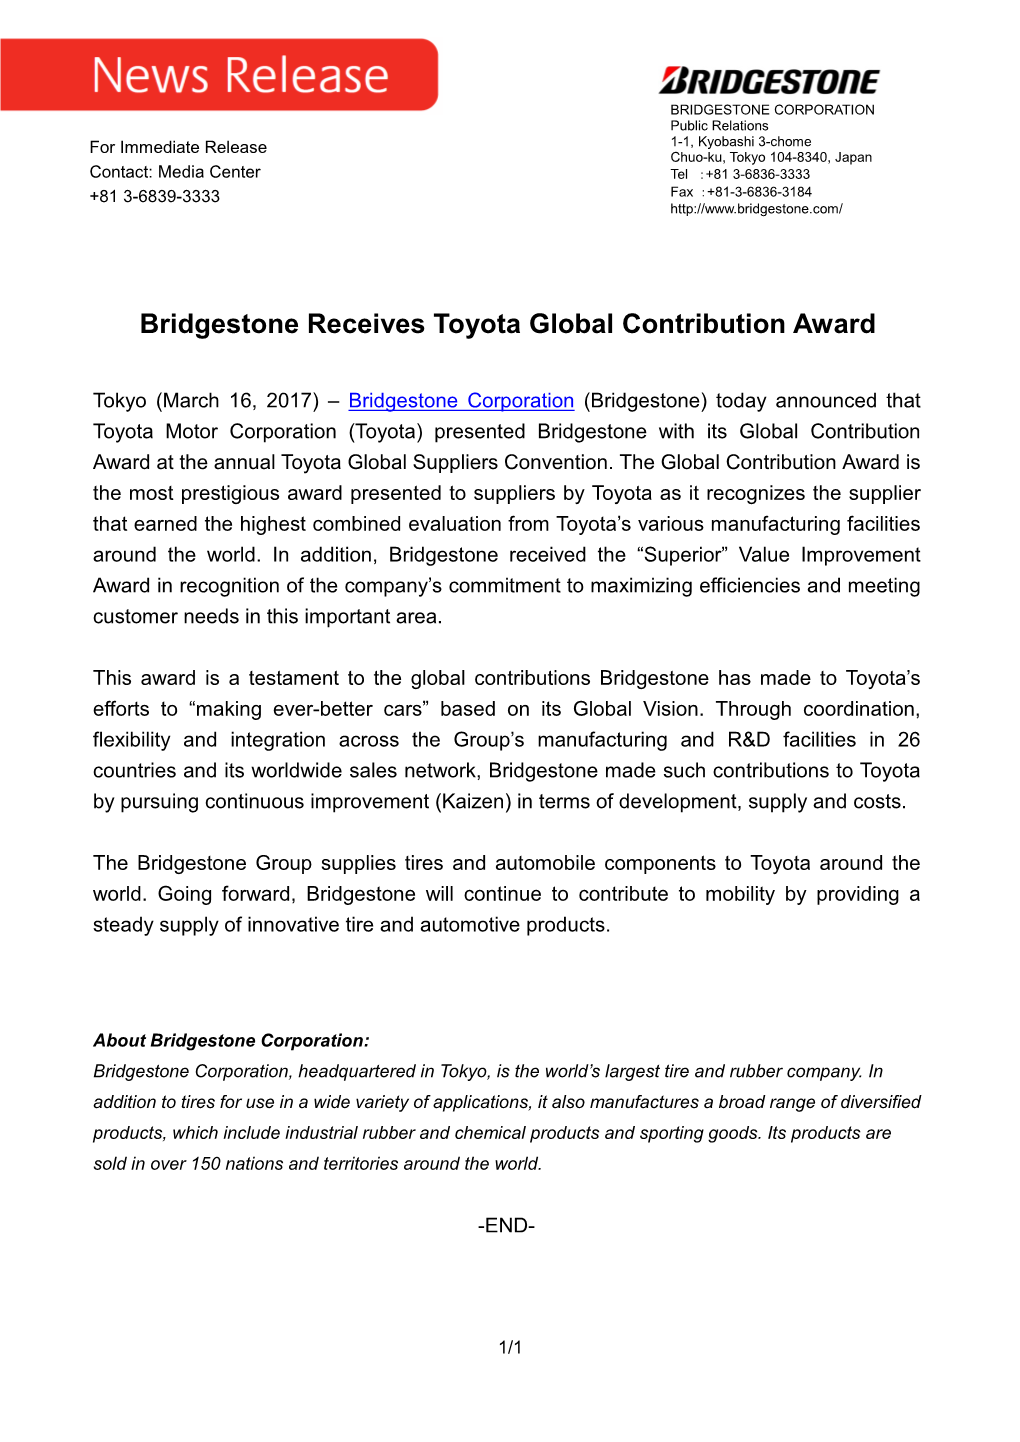 Bridgestone Receives Toyota Global Contribution Award